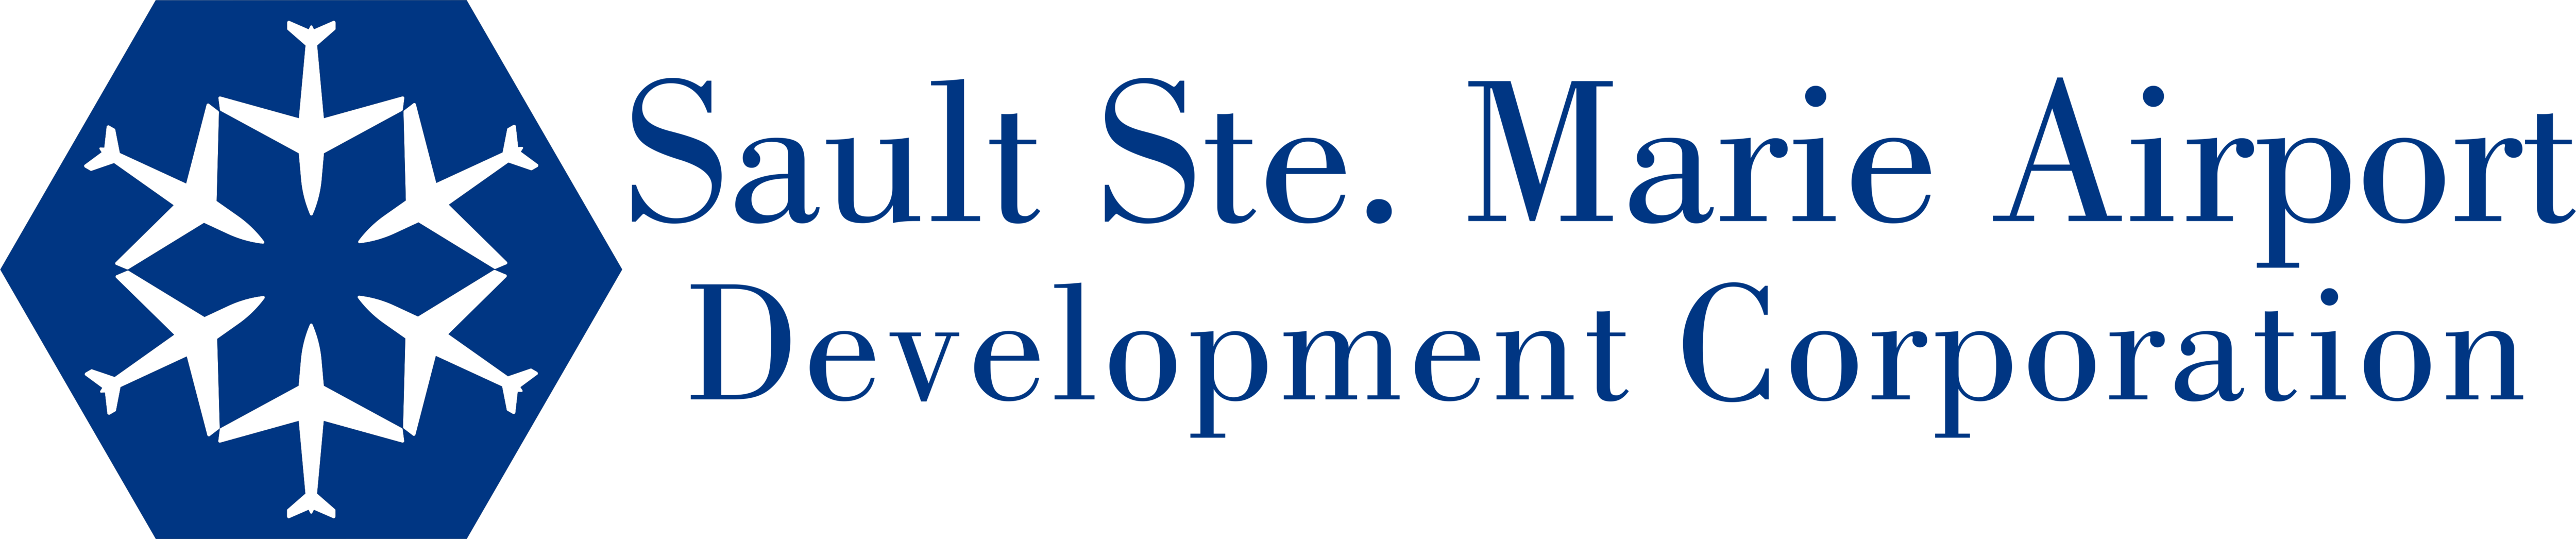 SSM Airport Development Corp